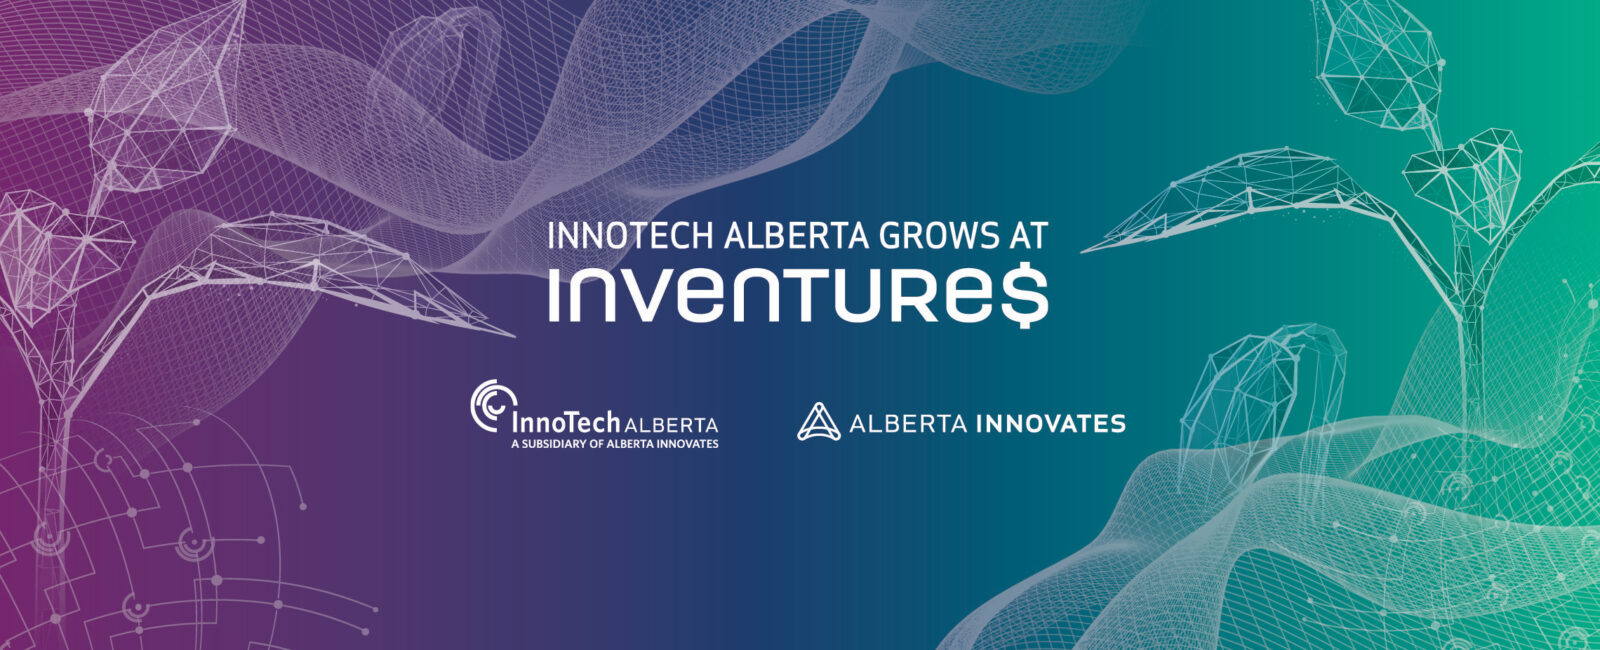 Innotech Alberta Grows At Inventures